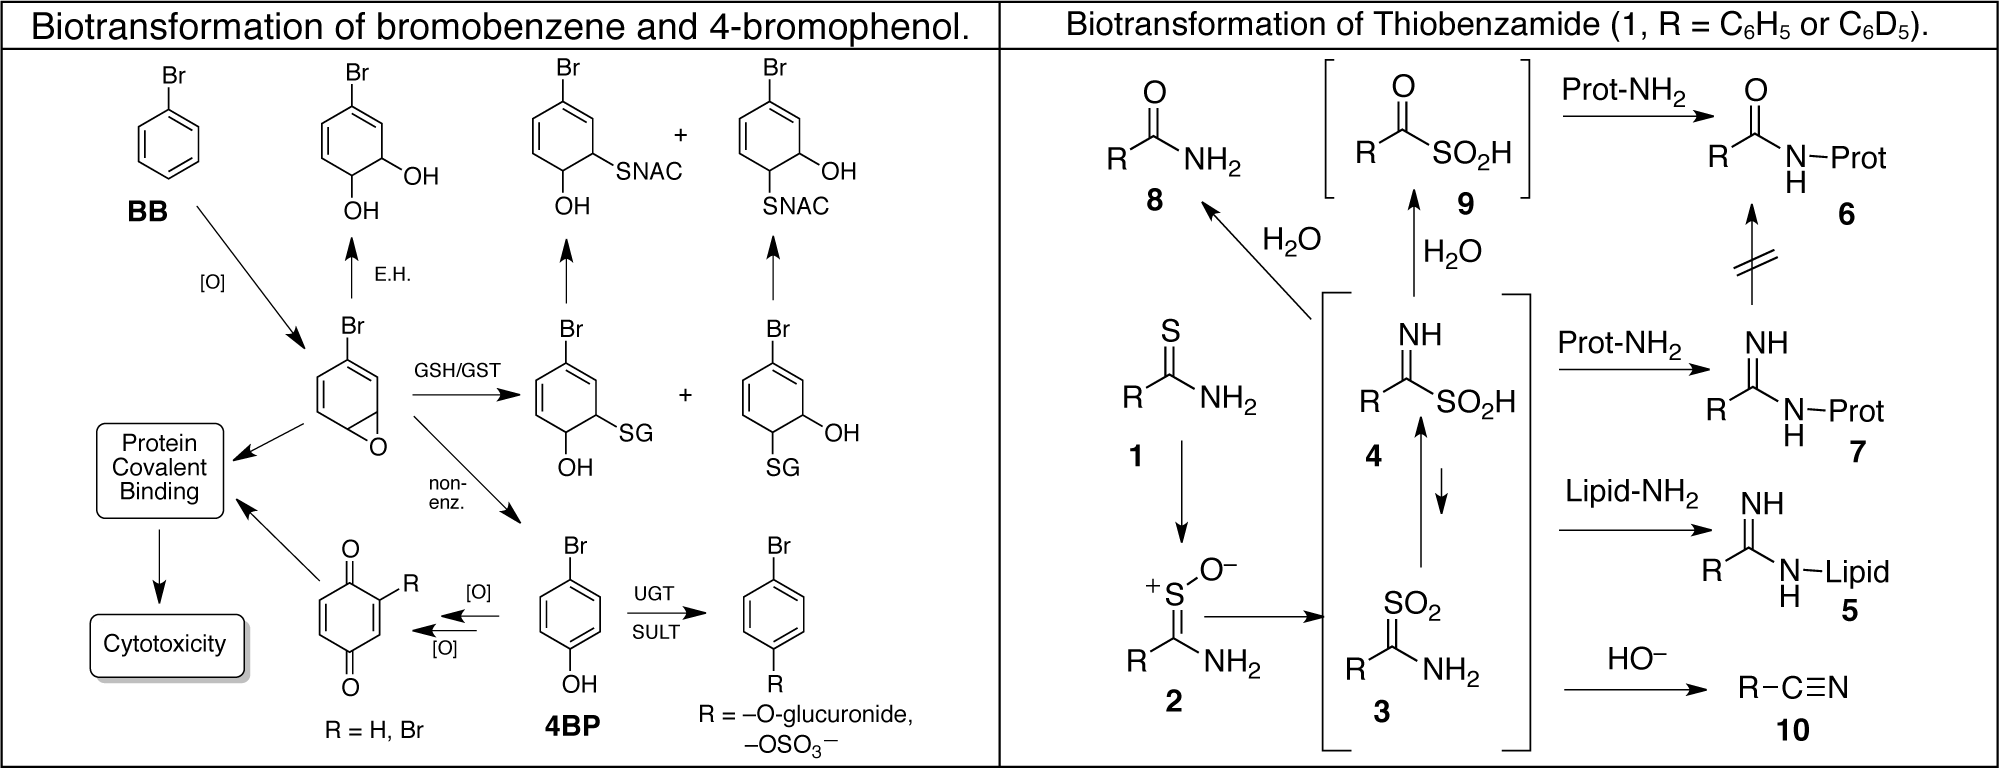 Image 1: Biotransformation of bromobenzene and 4-bromophenol; Image 2: Biotransformation of Thiobenzamide